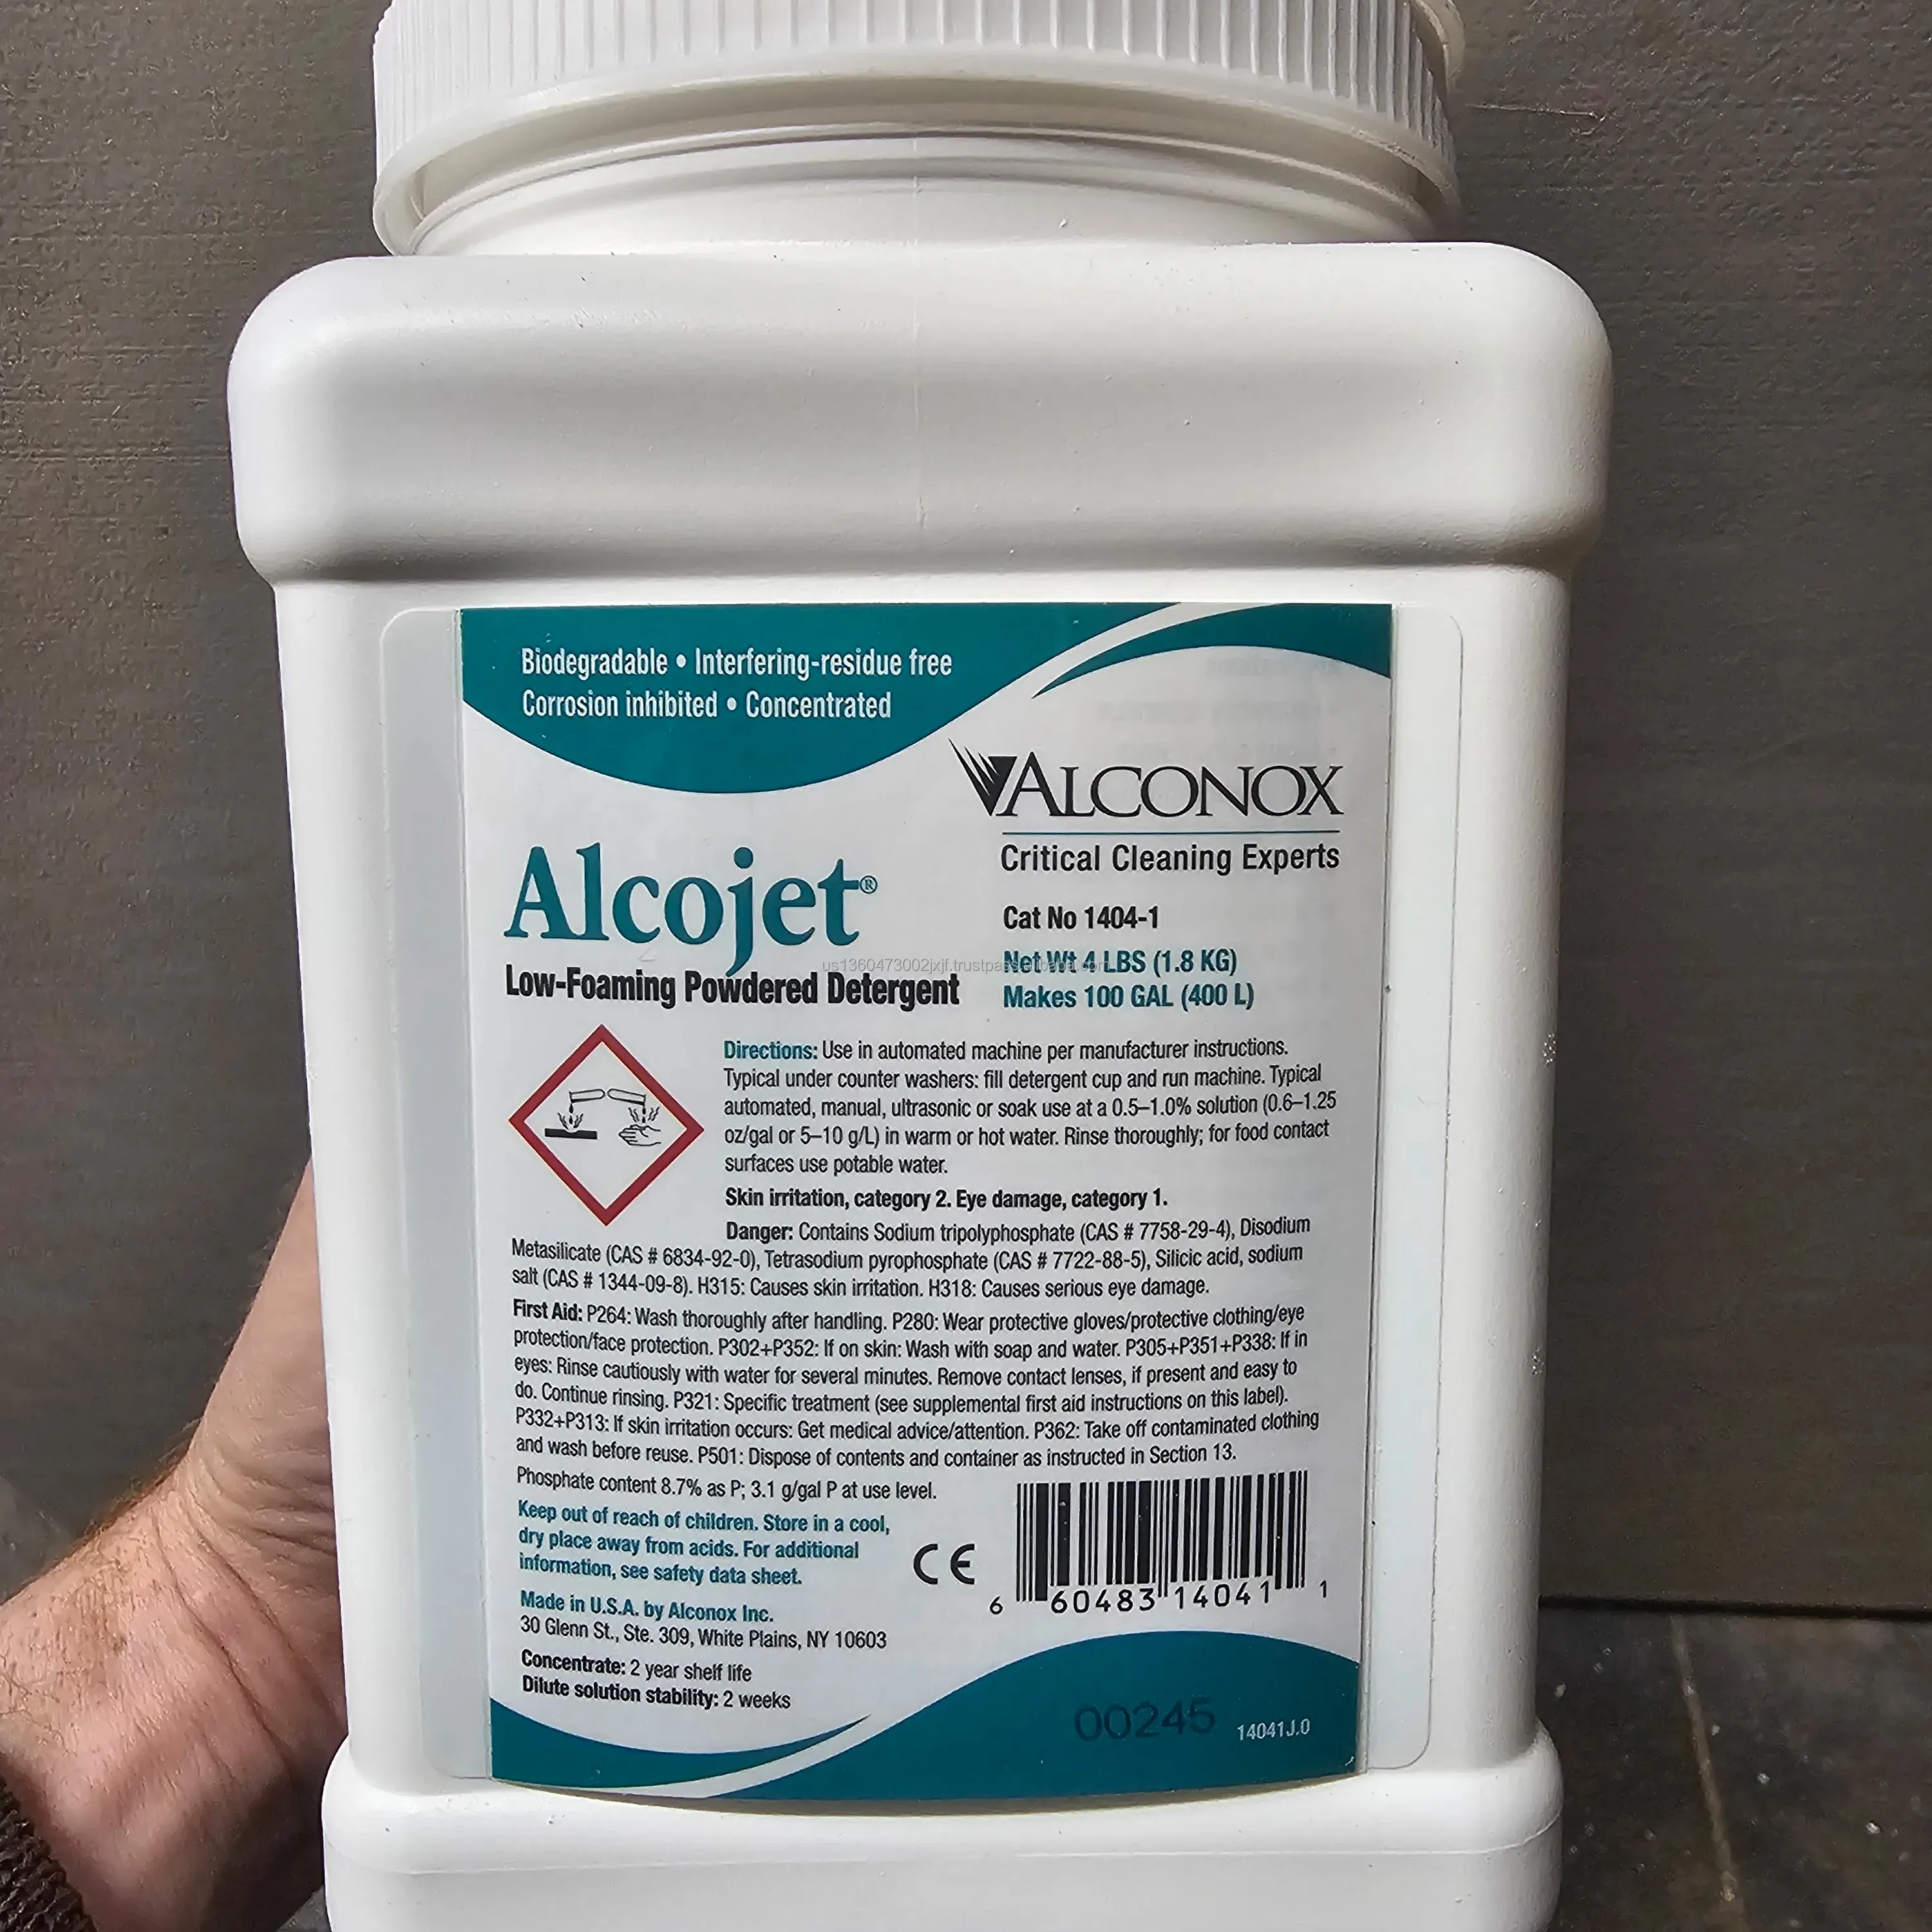 Alcojet Low-foaming Powdered Detergent